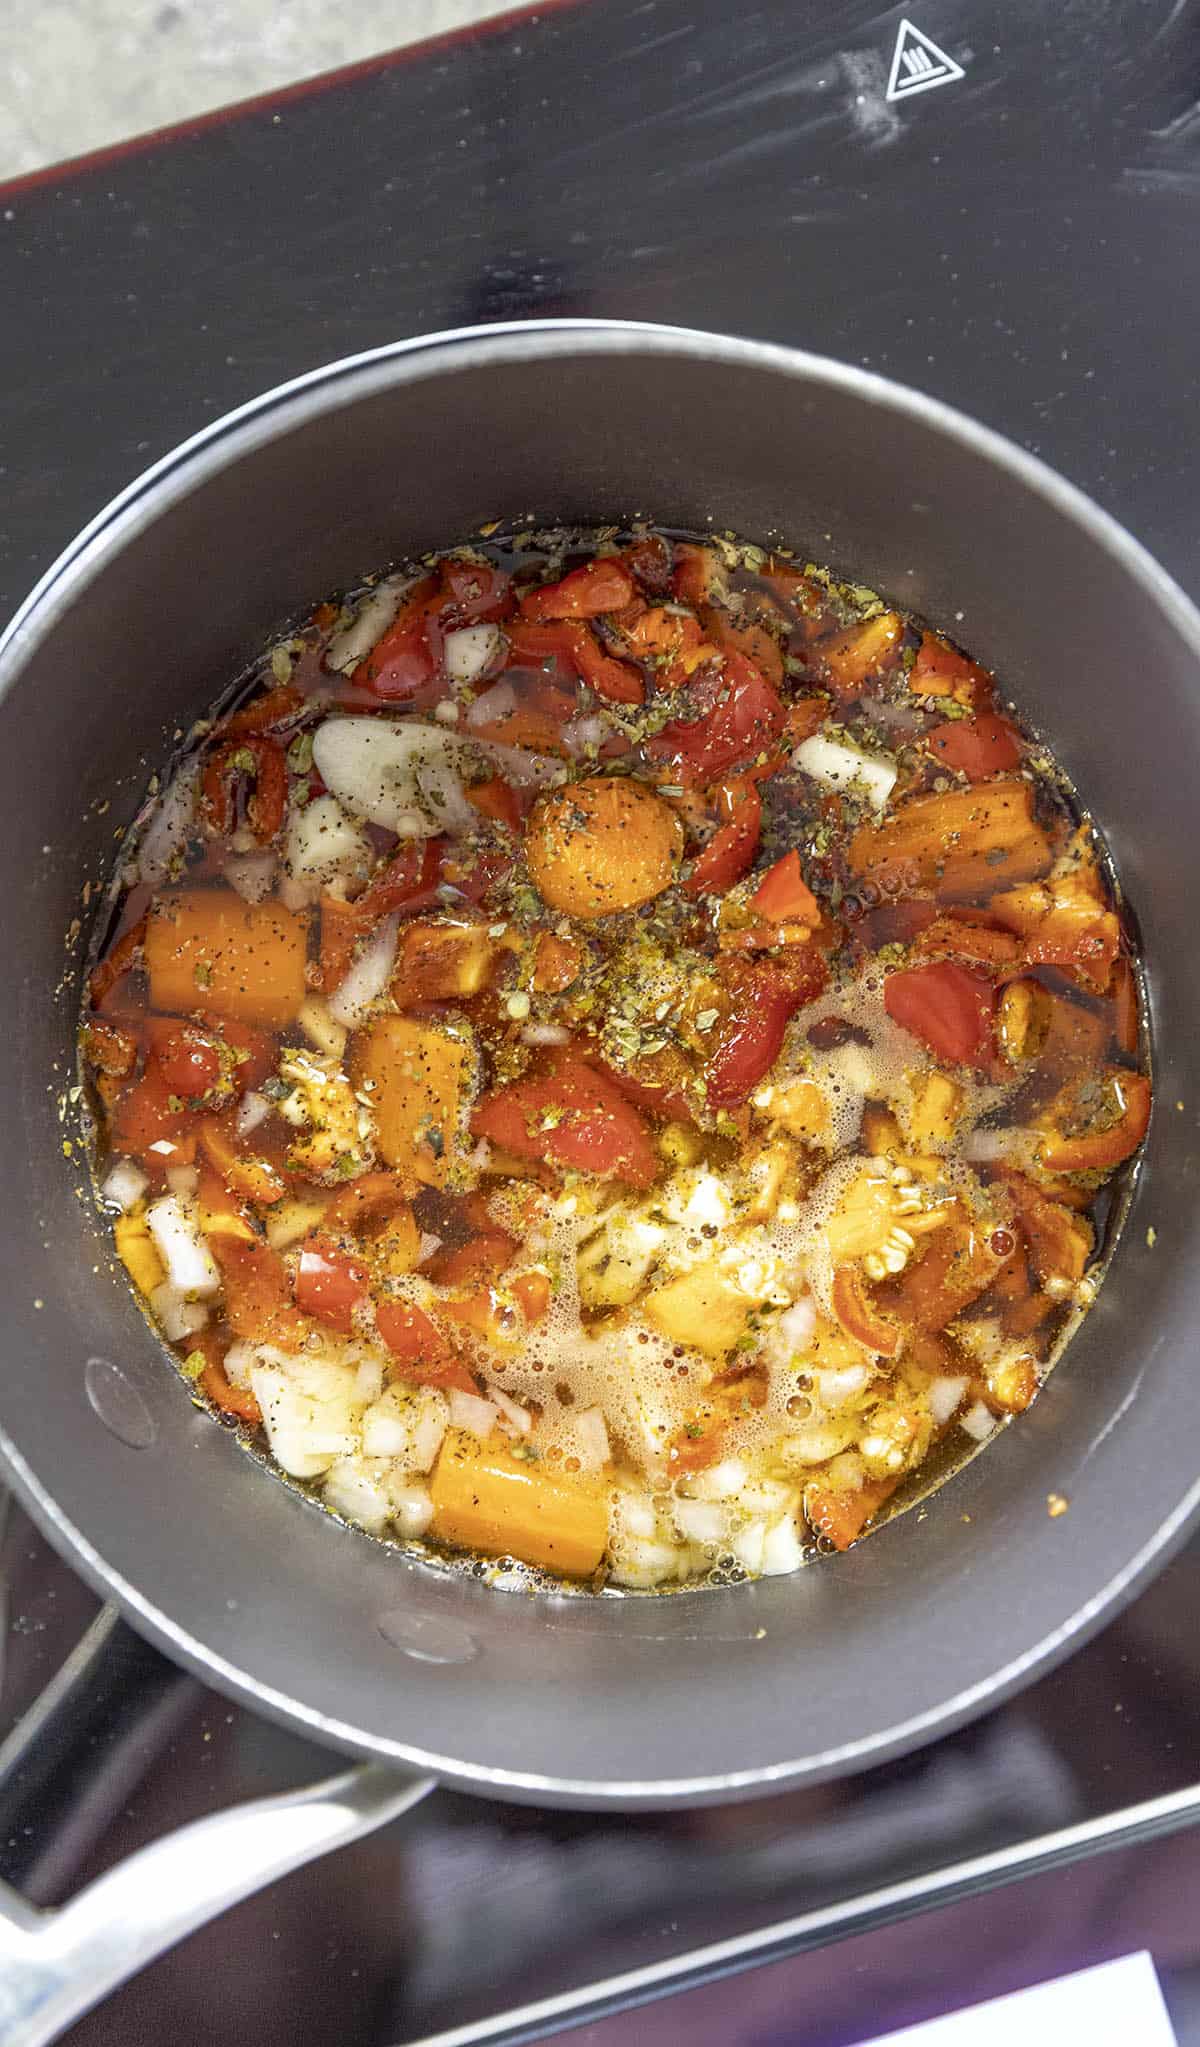 Habanero Hot Sauce ingredients simmering in a pot